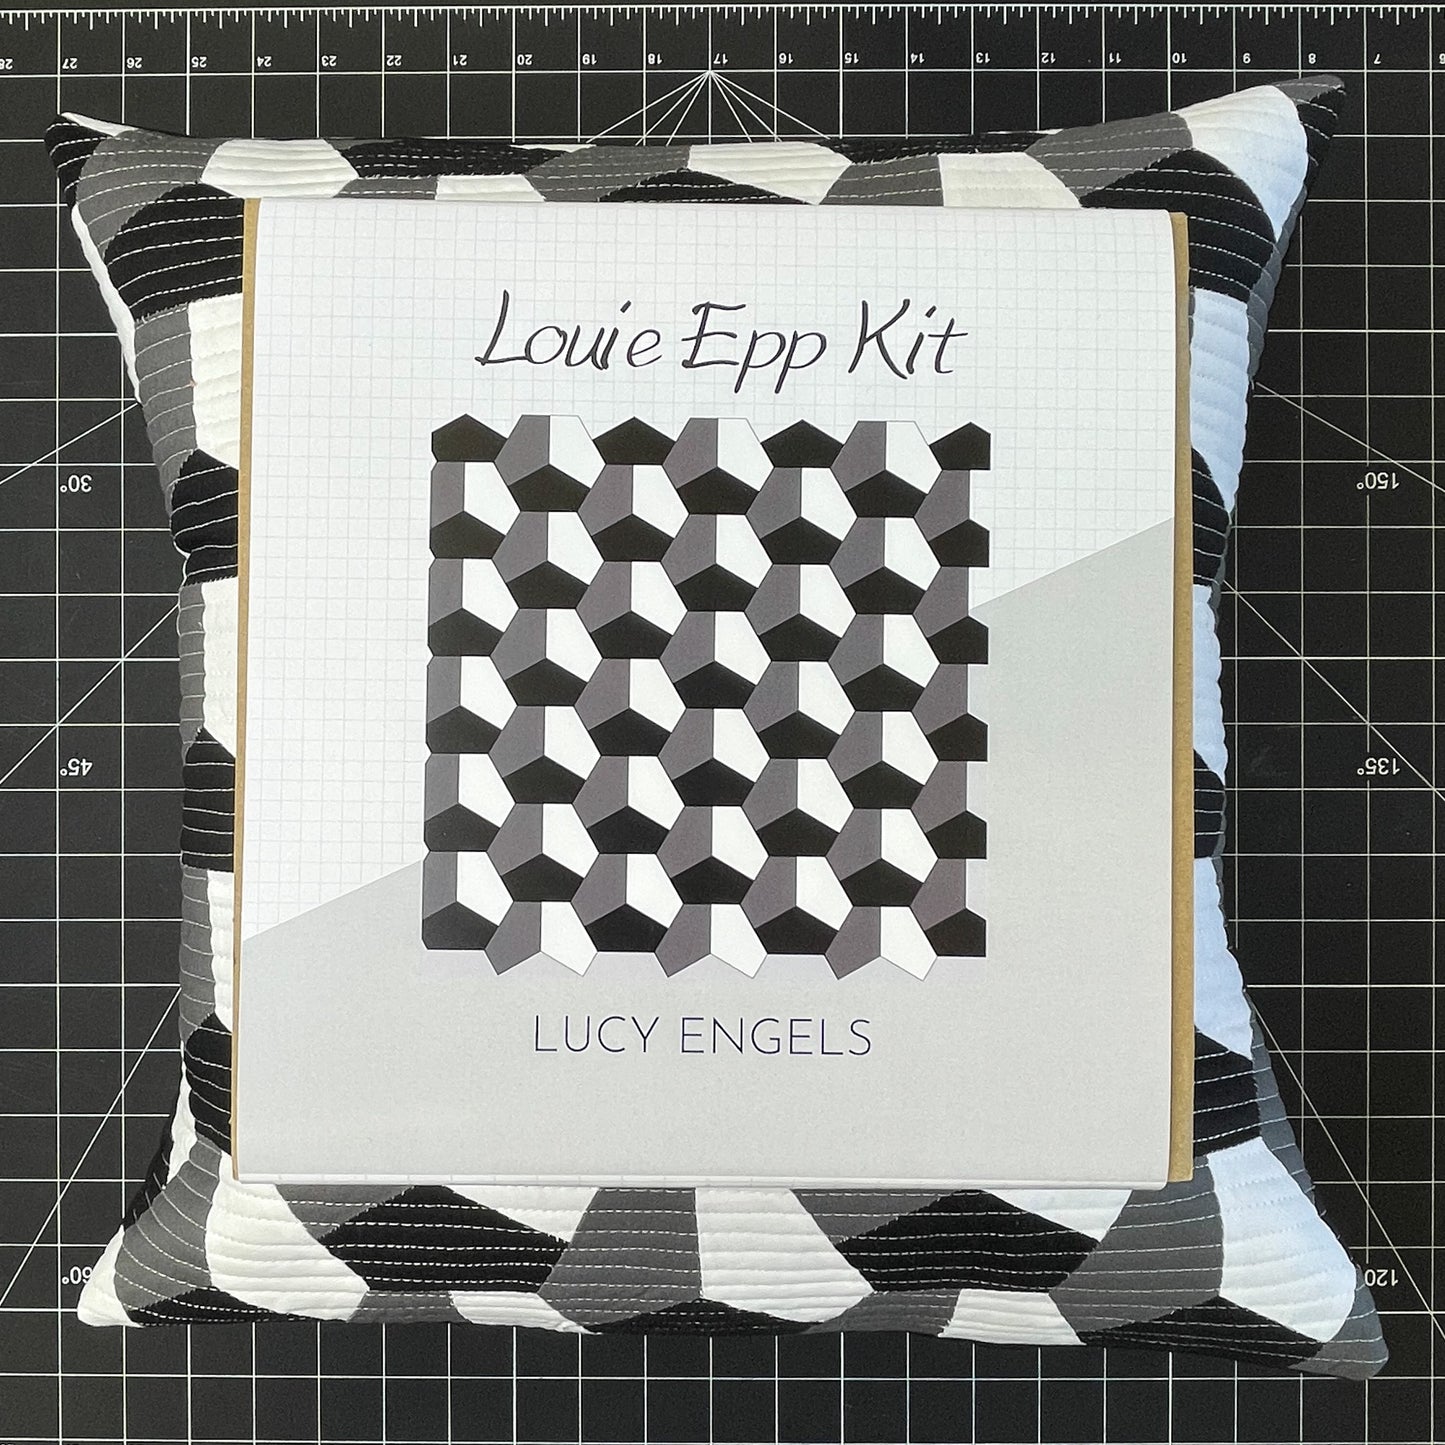 Louie EPP Kit